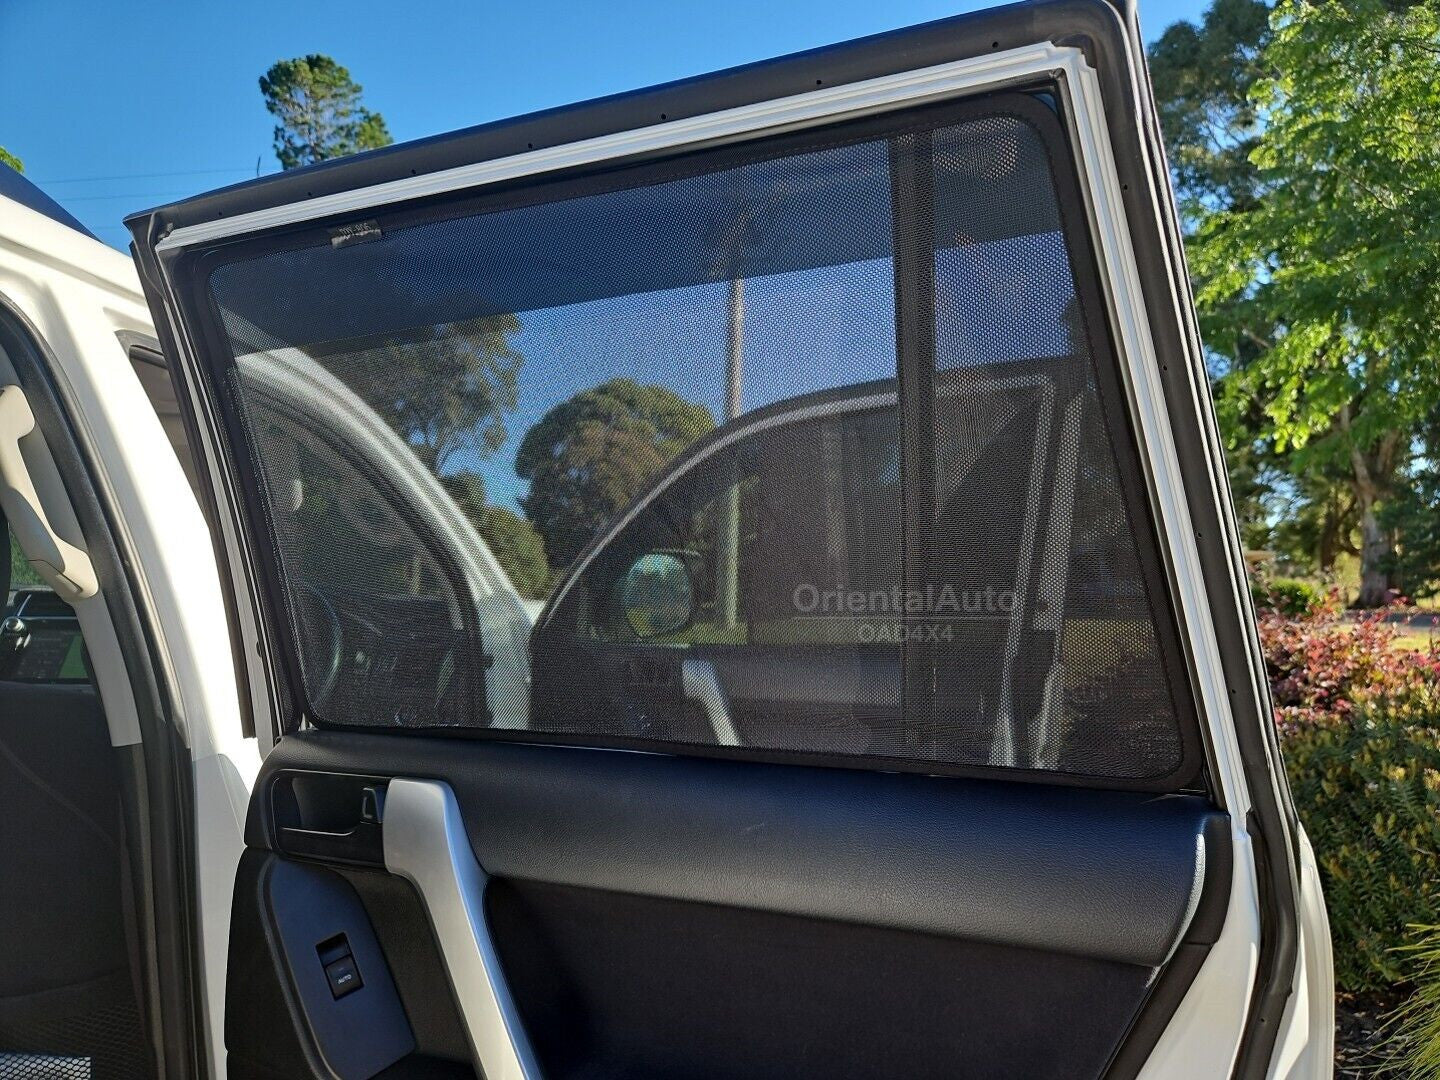 6PCS Magnetic Sun Shade for Toyota Prado 150 2009+ Window Sun Shades UV Protection Mesh Cover